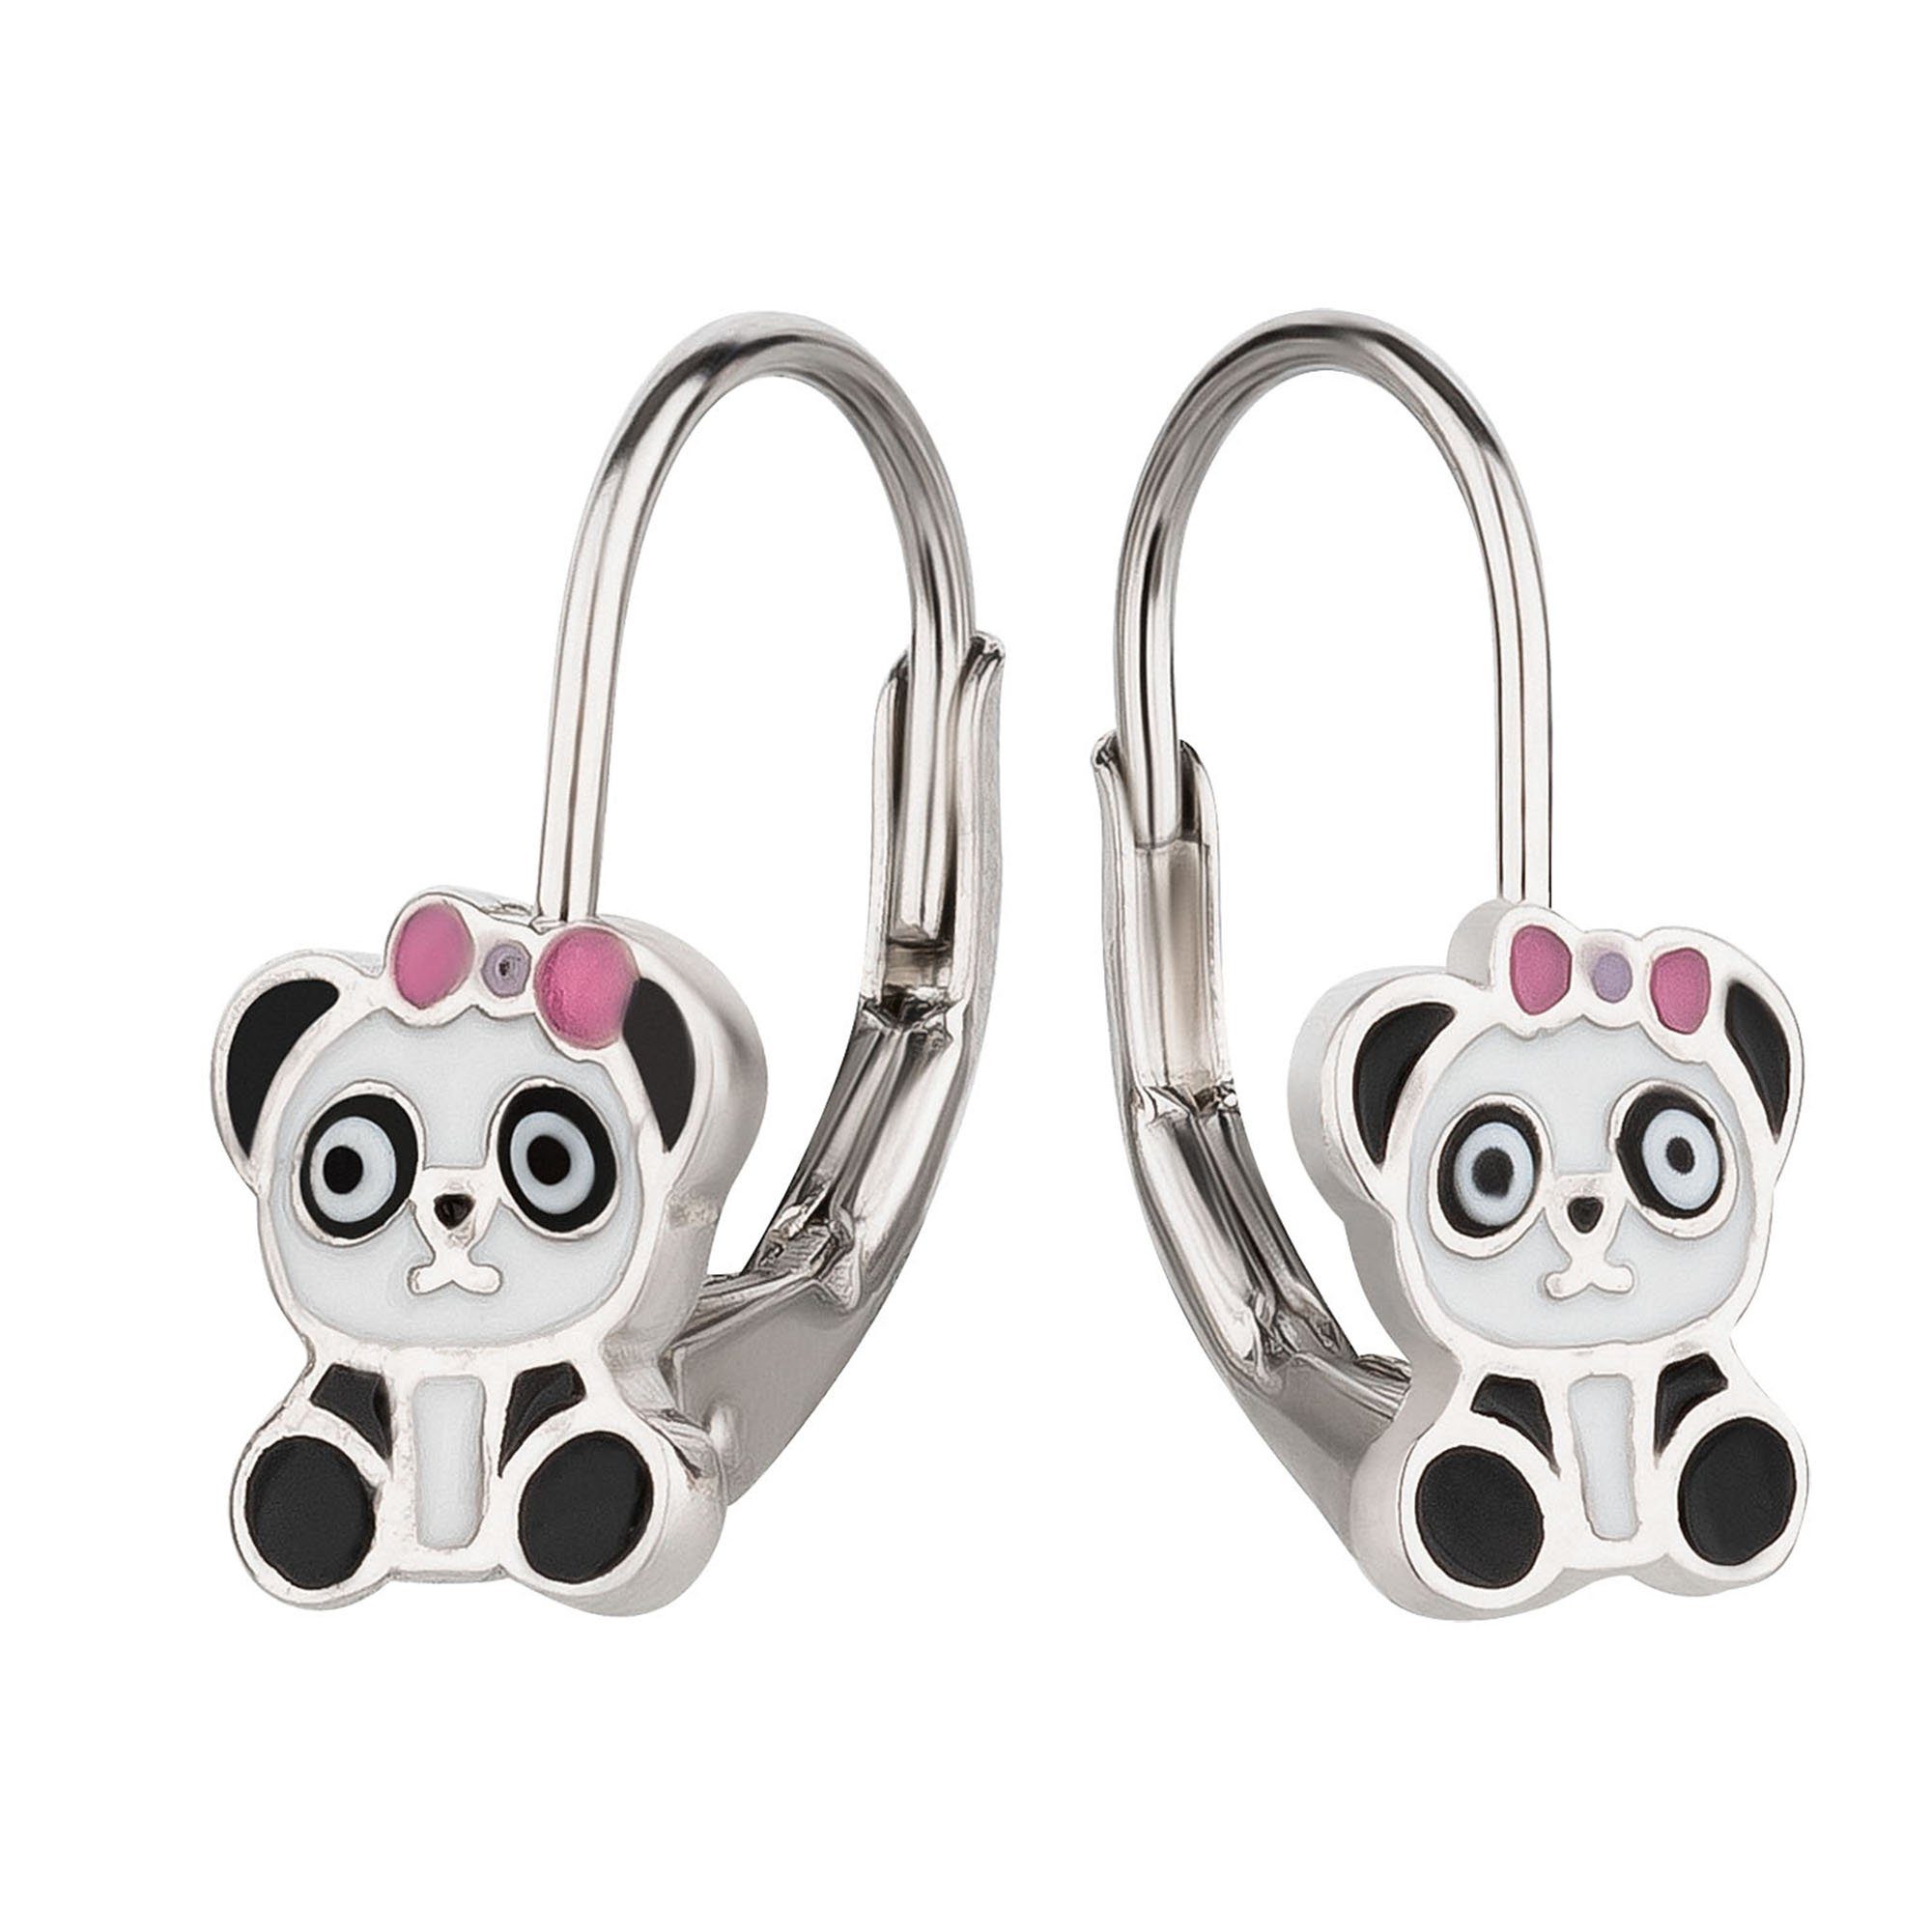 schmuck23 Paar Ohrhänger Kinder Ohrringe Panda Bär 925 Silber Mädchen, Mädchen Kinderschmuck echte Silberohrringe | Ohrhänger